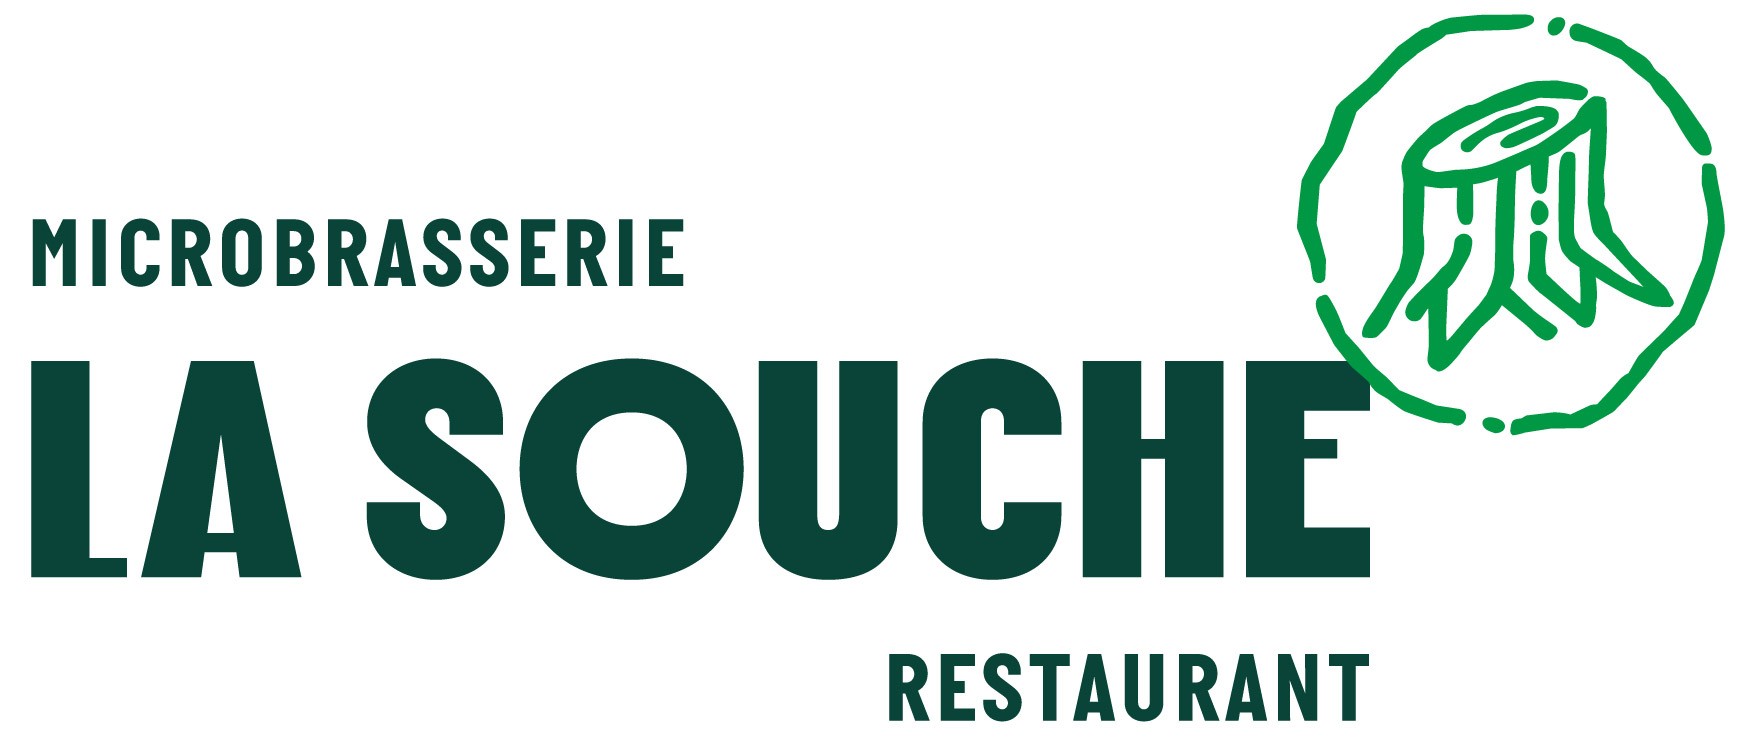 La Souche Microbrasserie-Restaurant